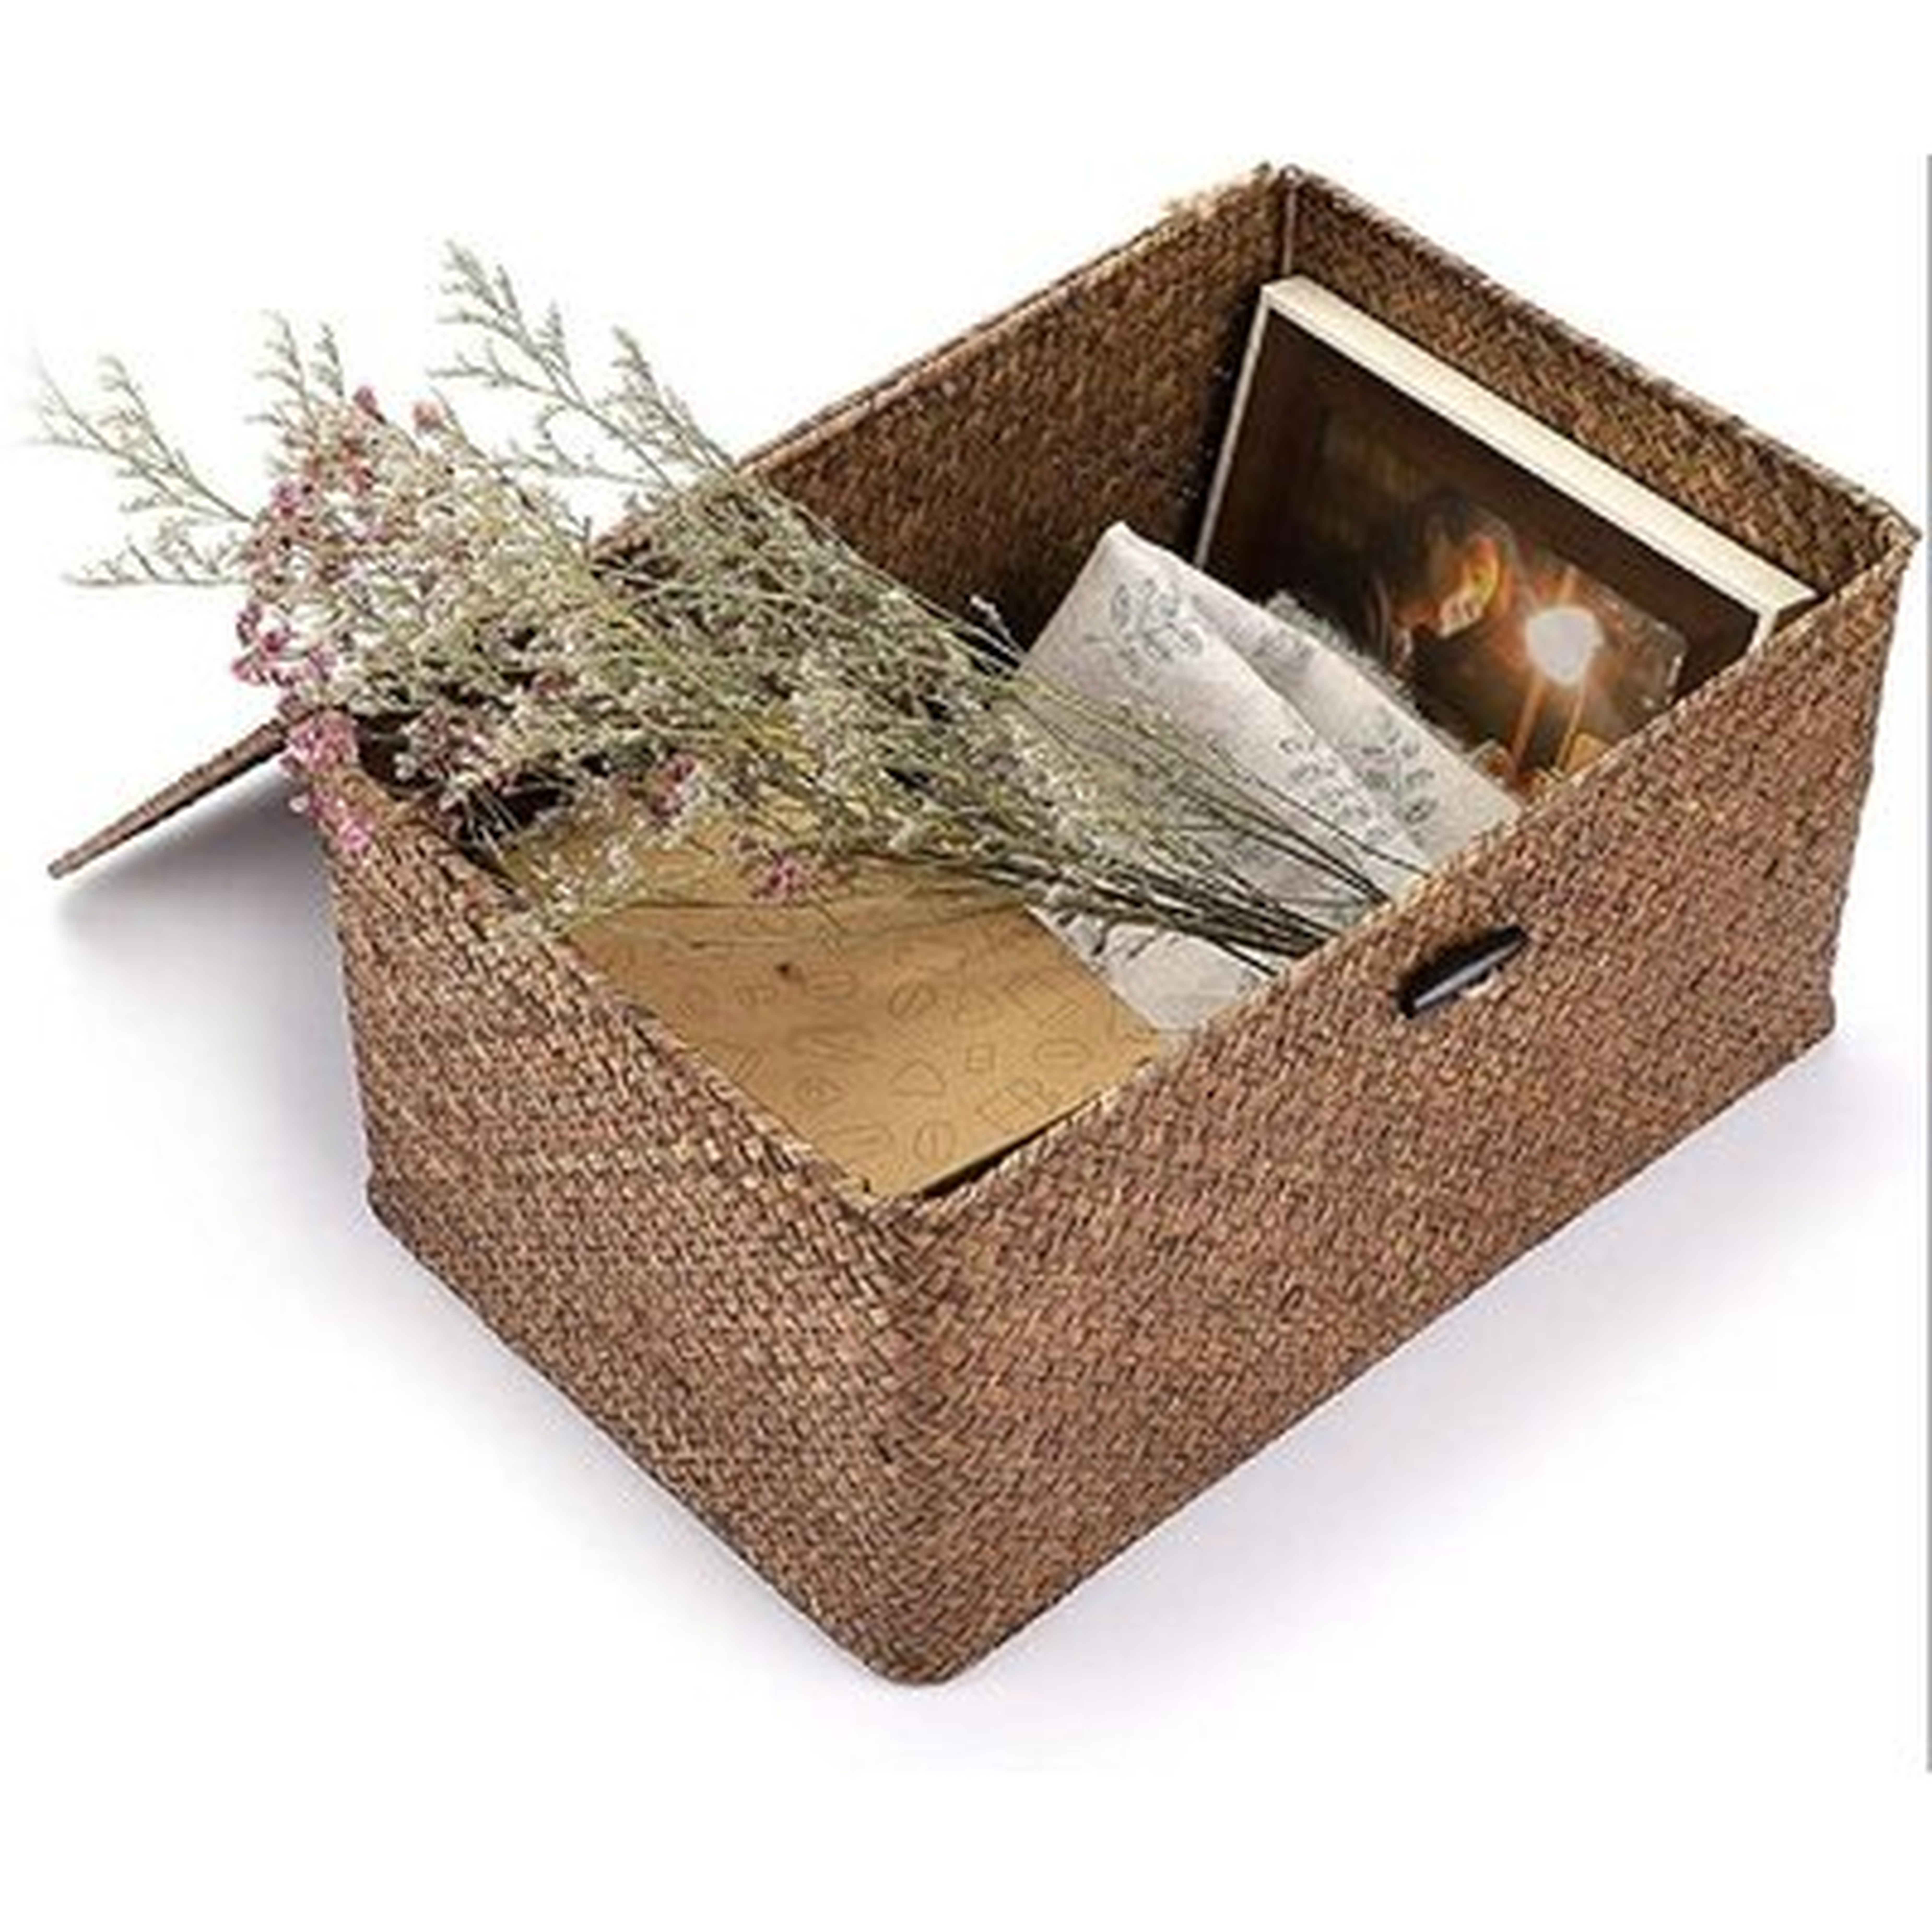 Set Of 3 Natural Seagrass Storage Baskets With Lid - Large Handwoven Wicker Storage Bins Rectangular Household Organizer Boxes Shelf Wardrobe Organizer, Natural Color - Wayfair